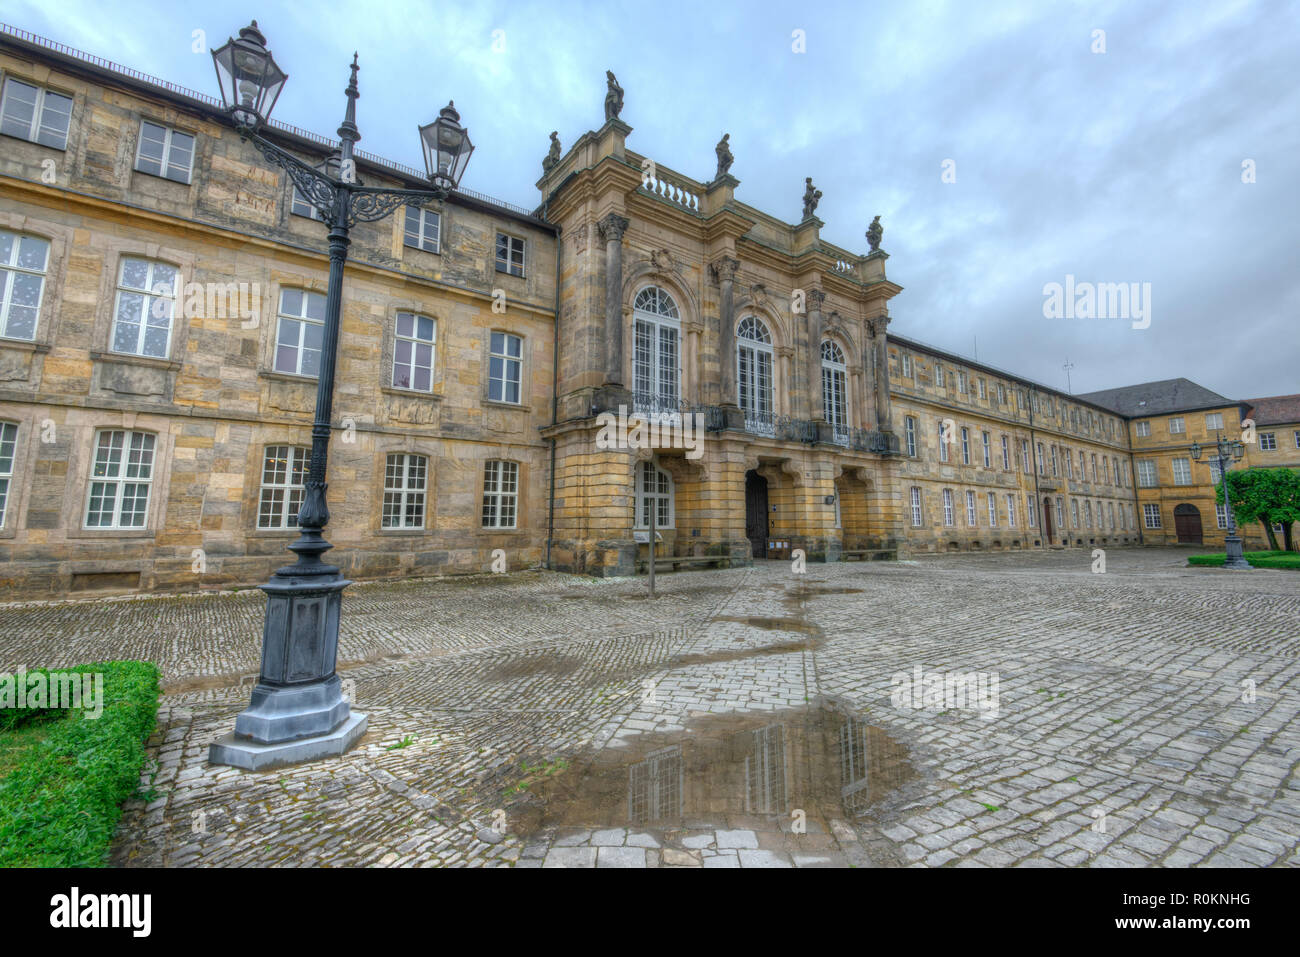 Bayreuth Neues Schloss - Bayreuth New Palace Stock Photo